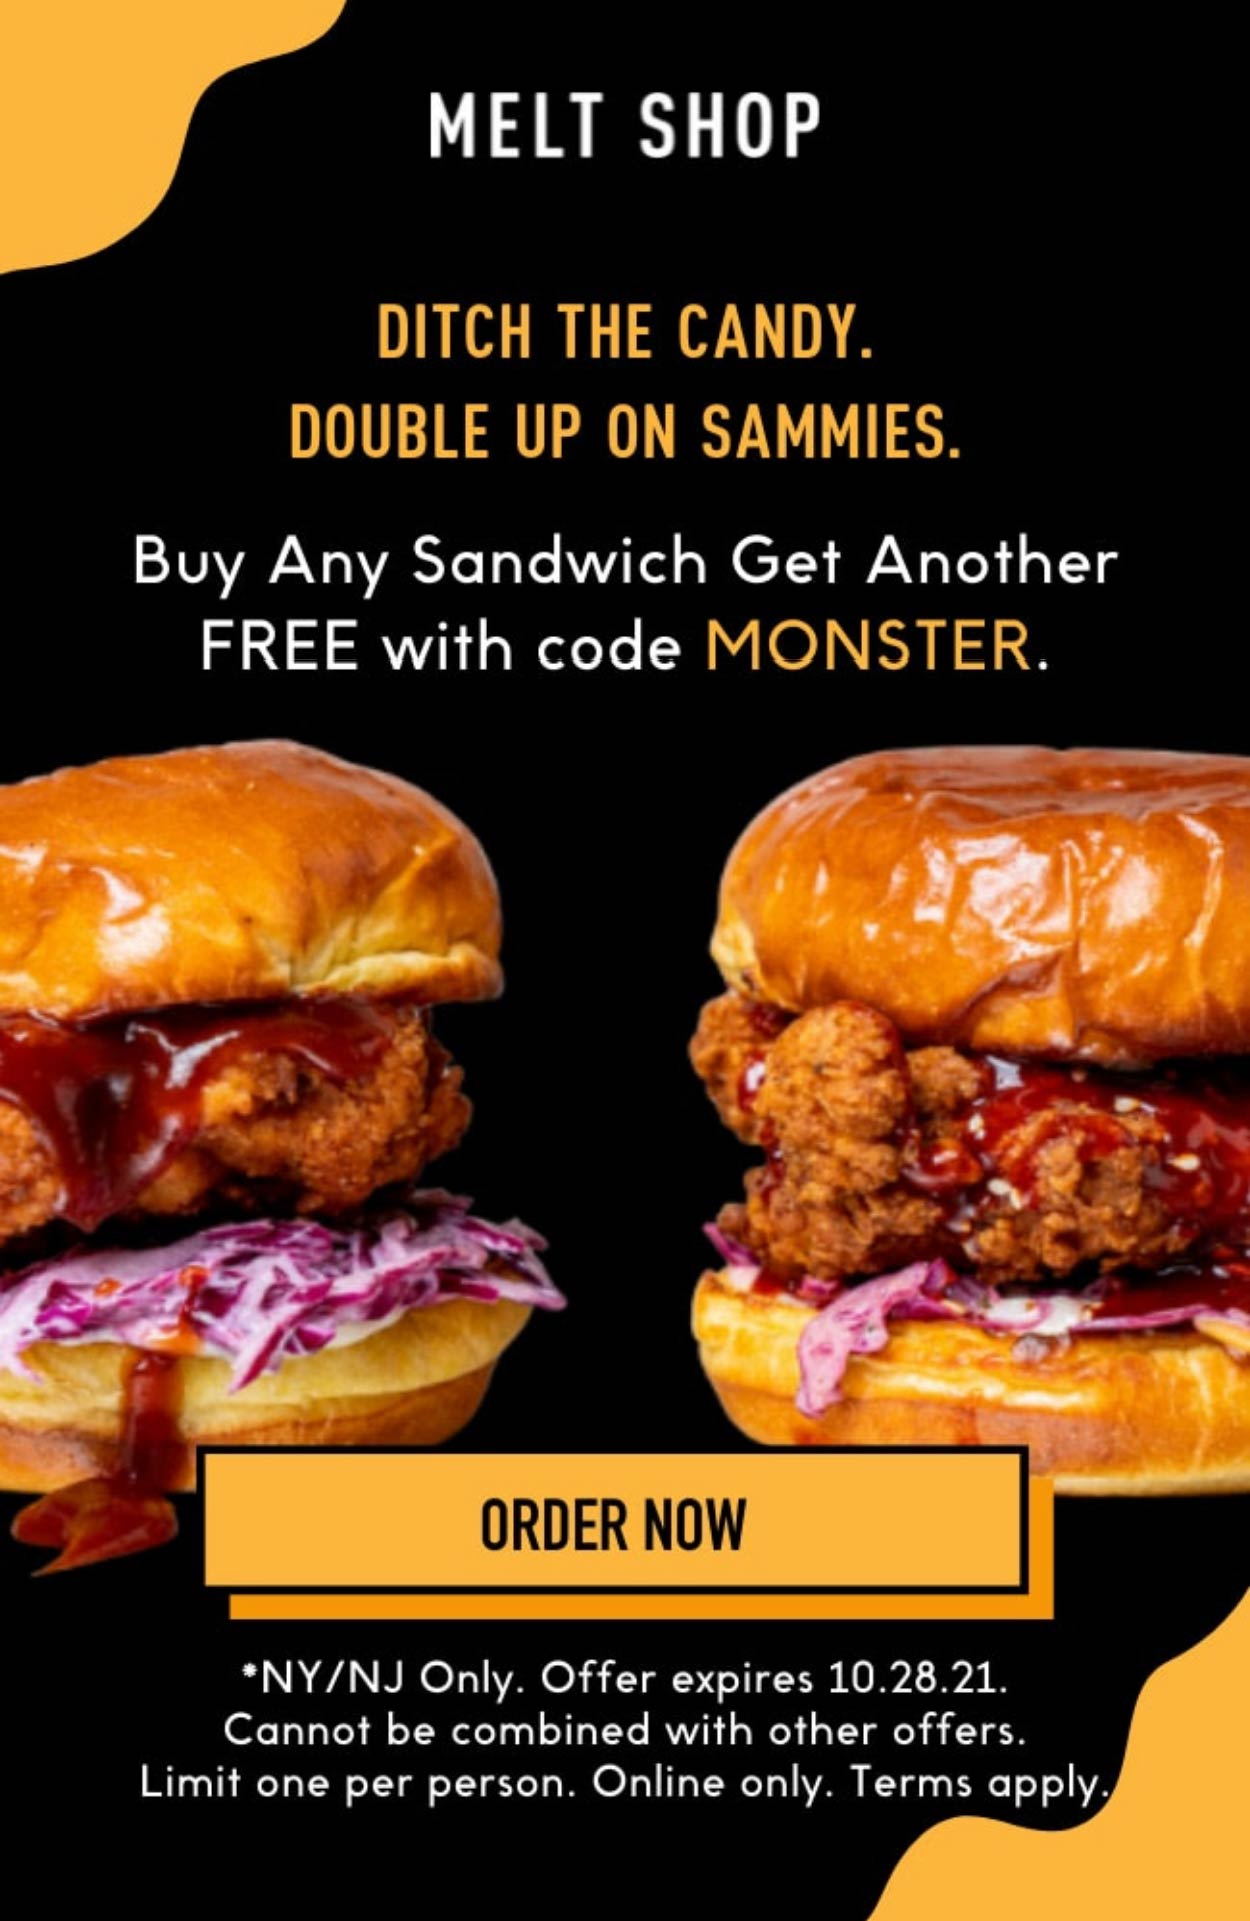 Melt Shop restaurants Coupon  Second sandwich free at Melt Shop via promo code MONSTER #meltshop 